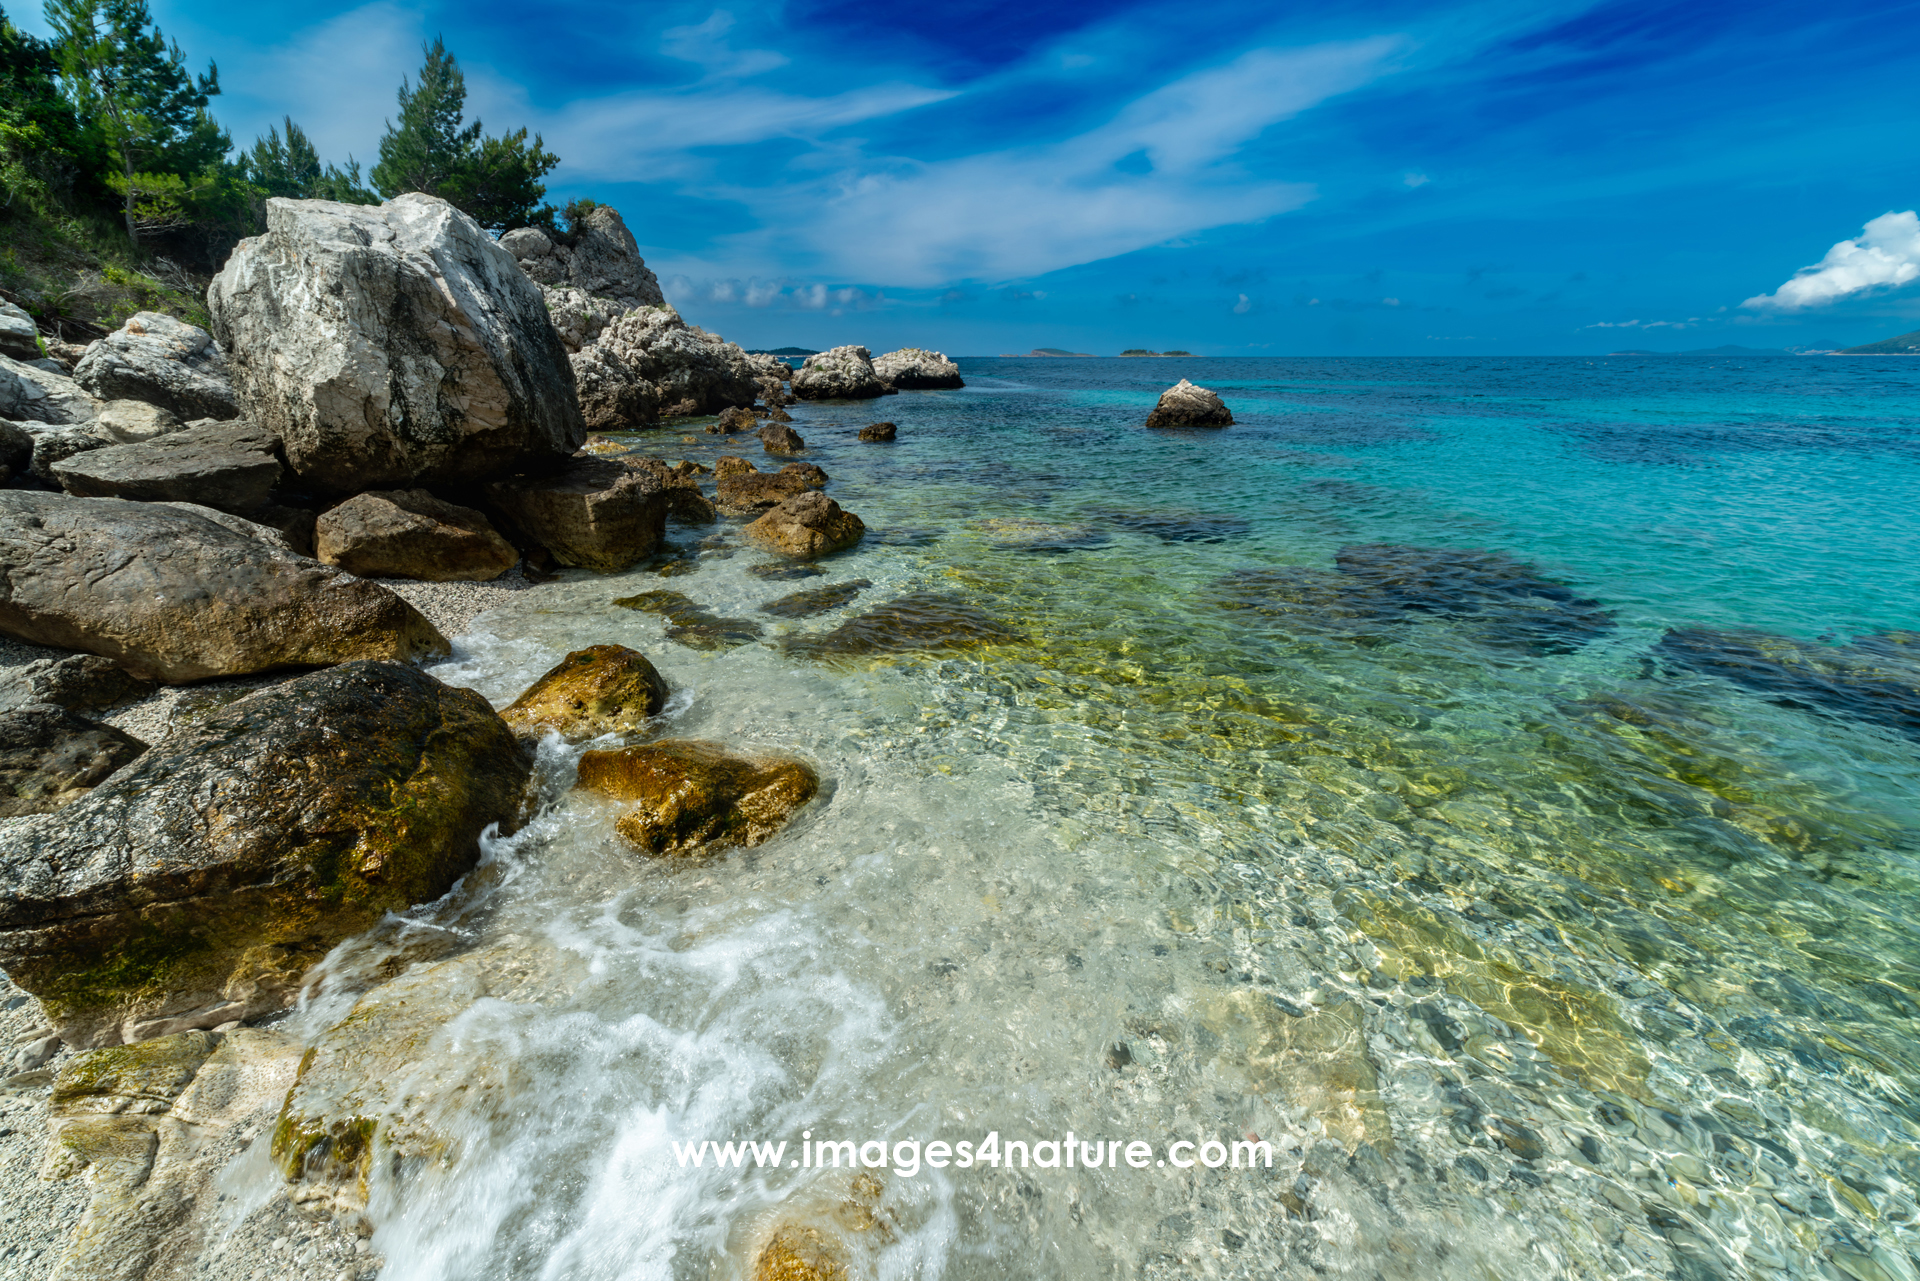 Hidden mediterrenean beach in Croatia with crystal clear water